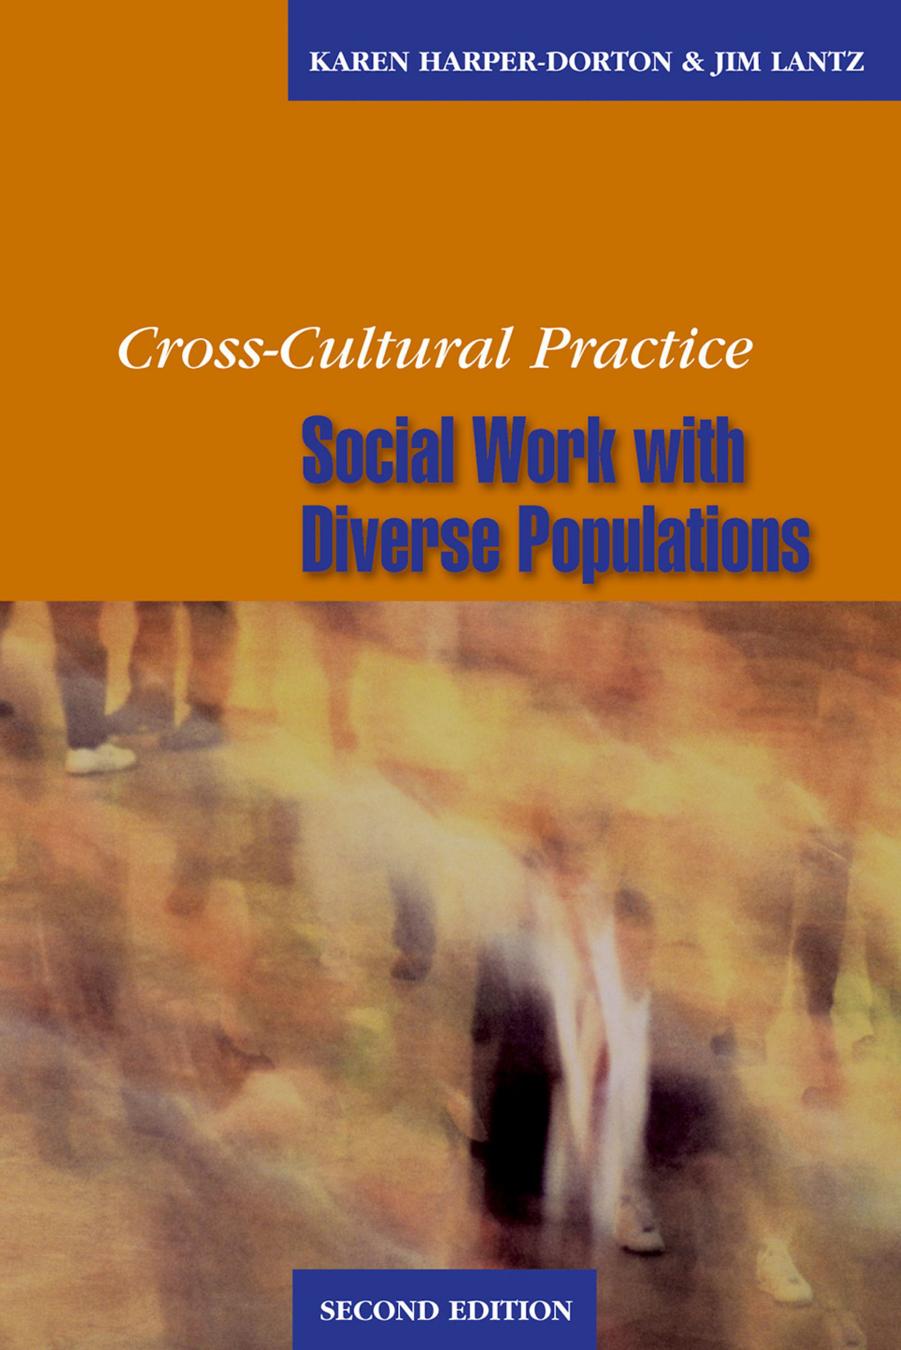 Cross-Cultural Practice, Second Edition : Social Work with Diverse Populations by Karen Harper-Dorton; Jim Lantz